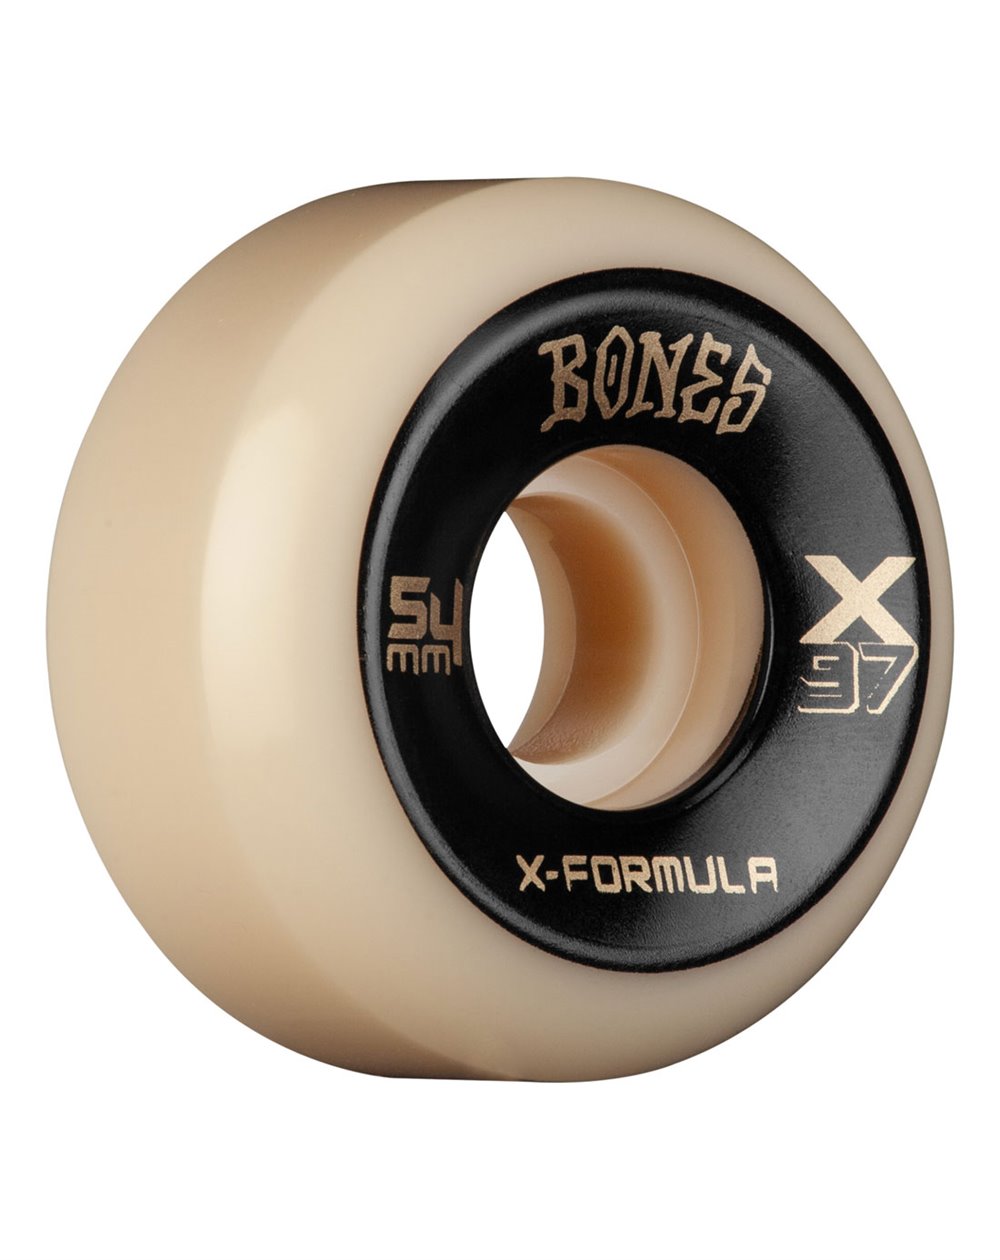 Bones Wheels Roues Skateboard X-Formula V5 Sidecut X-Ninety-Seven 54mm 97A 4 pc